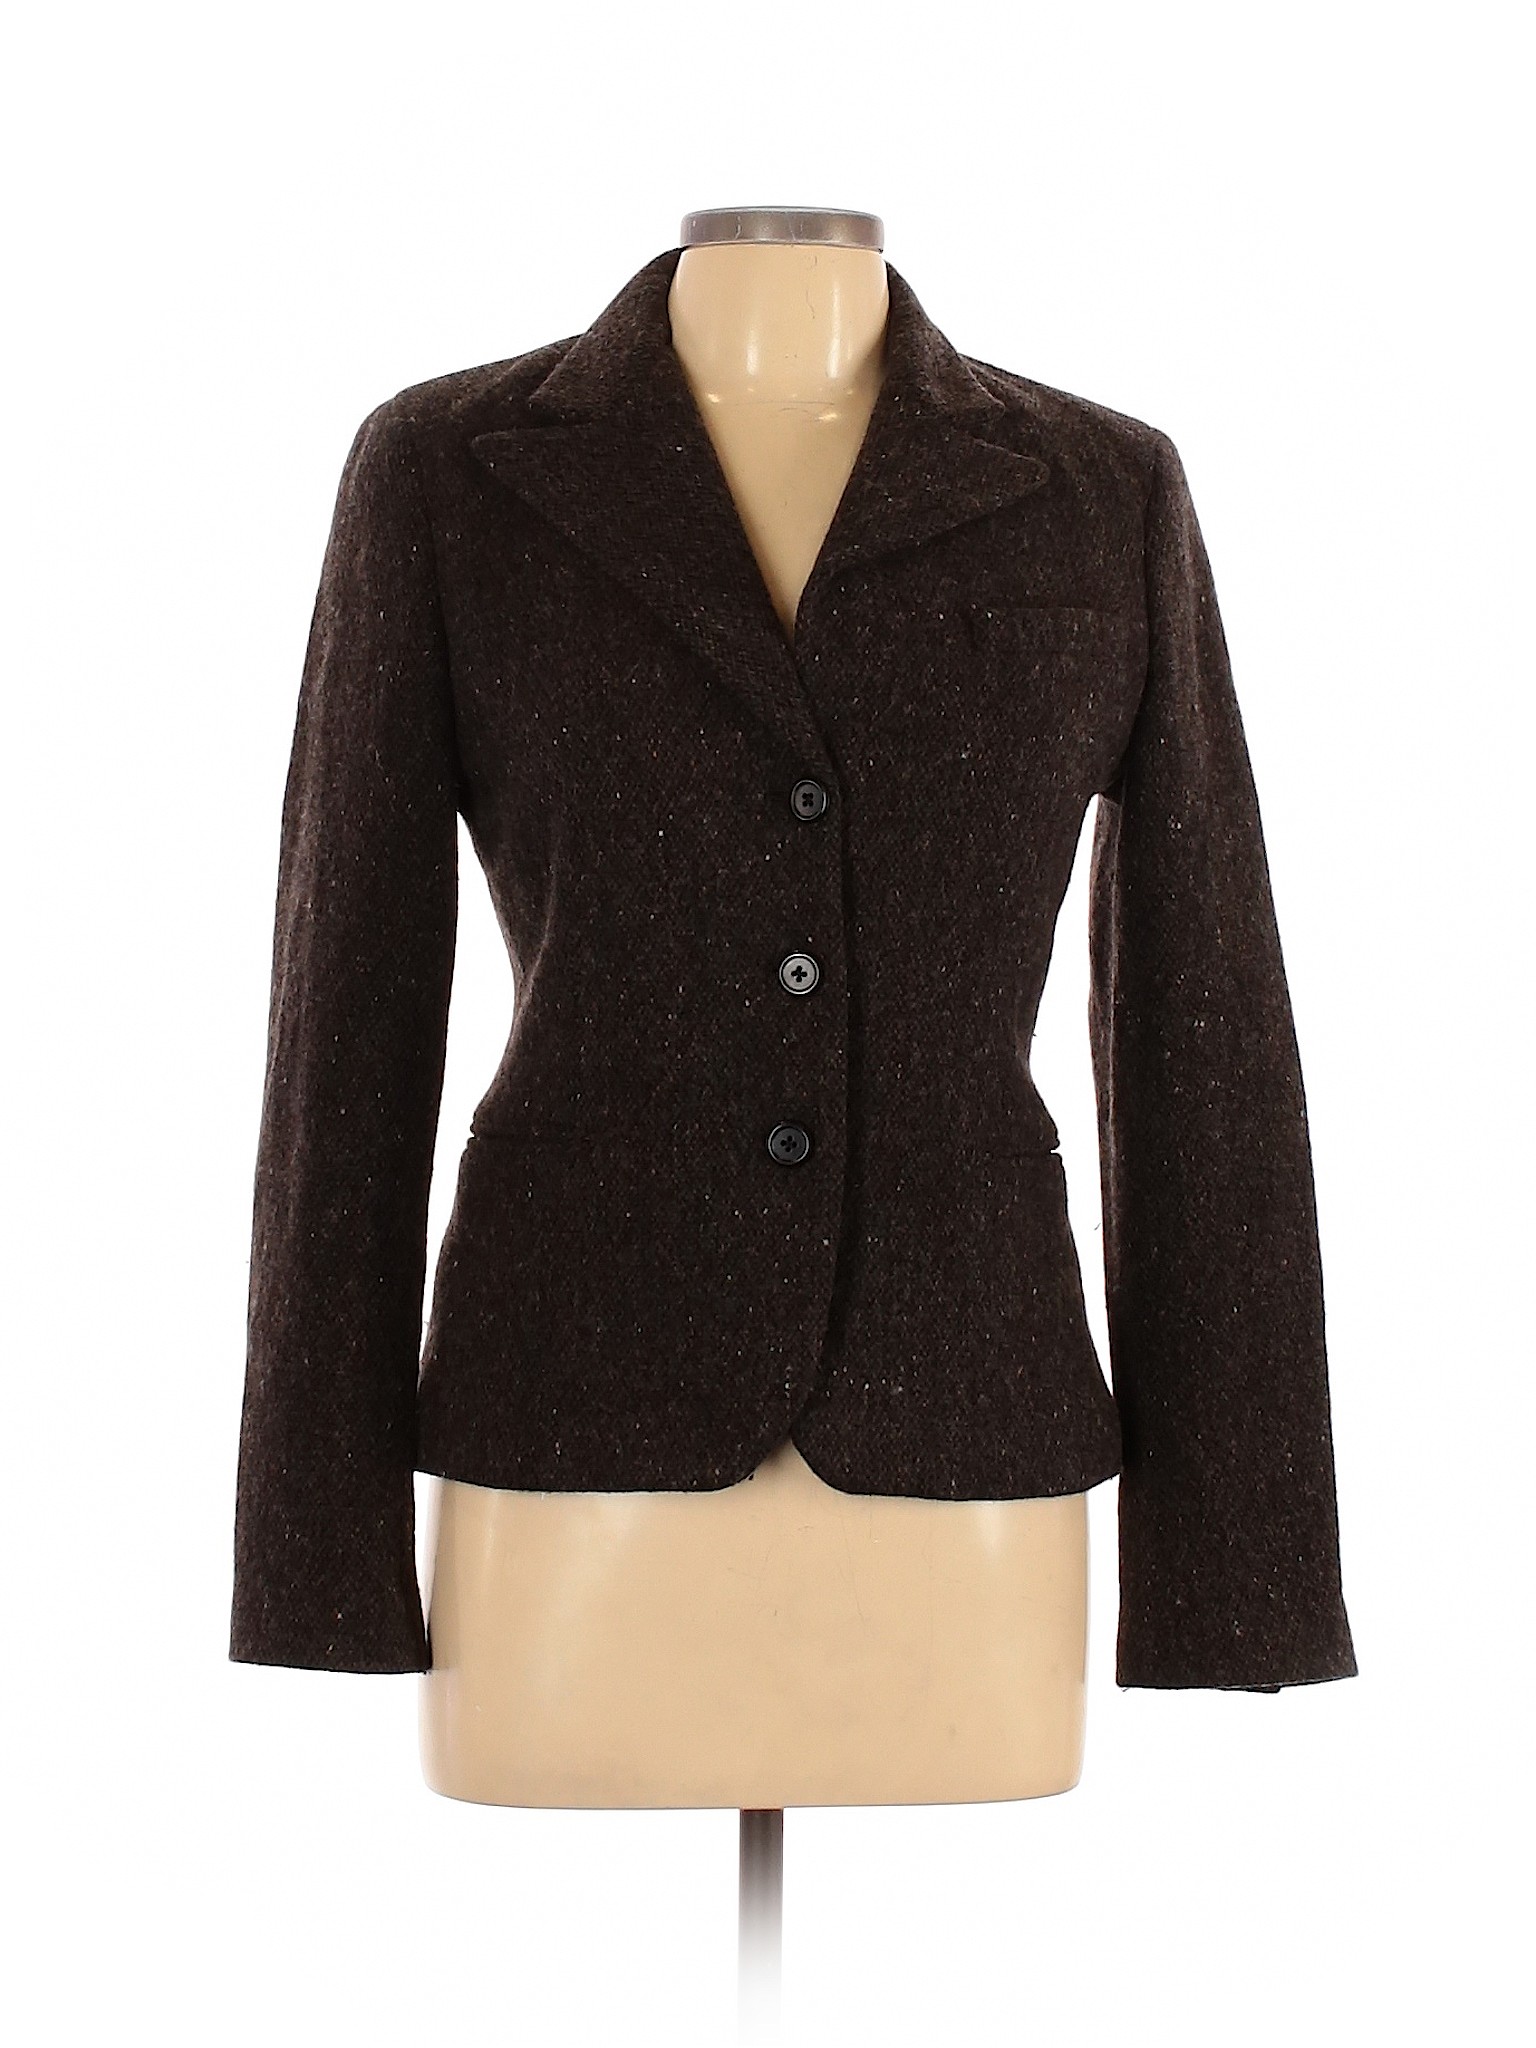 Ralph Lauren Women Brown Wool Blazer 10 | eBay